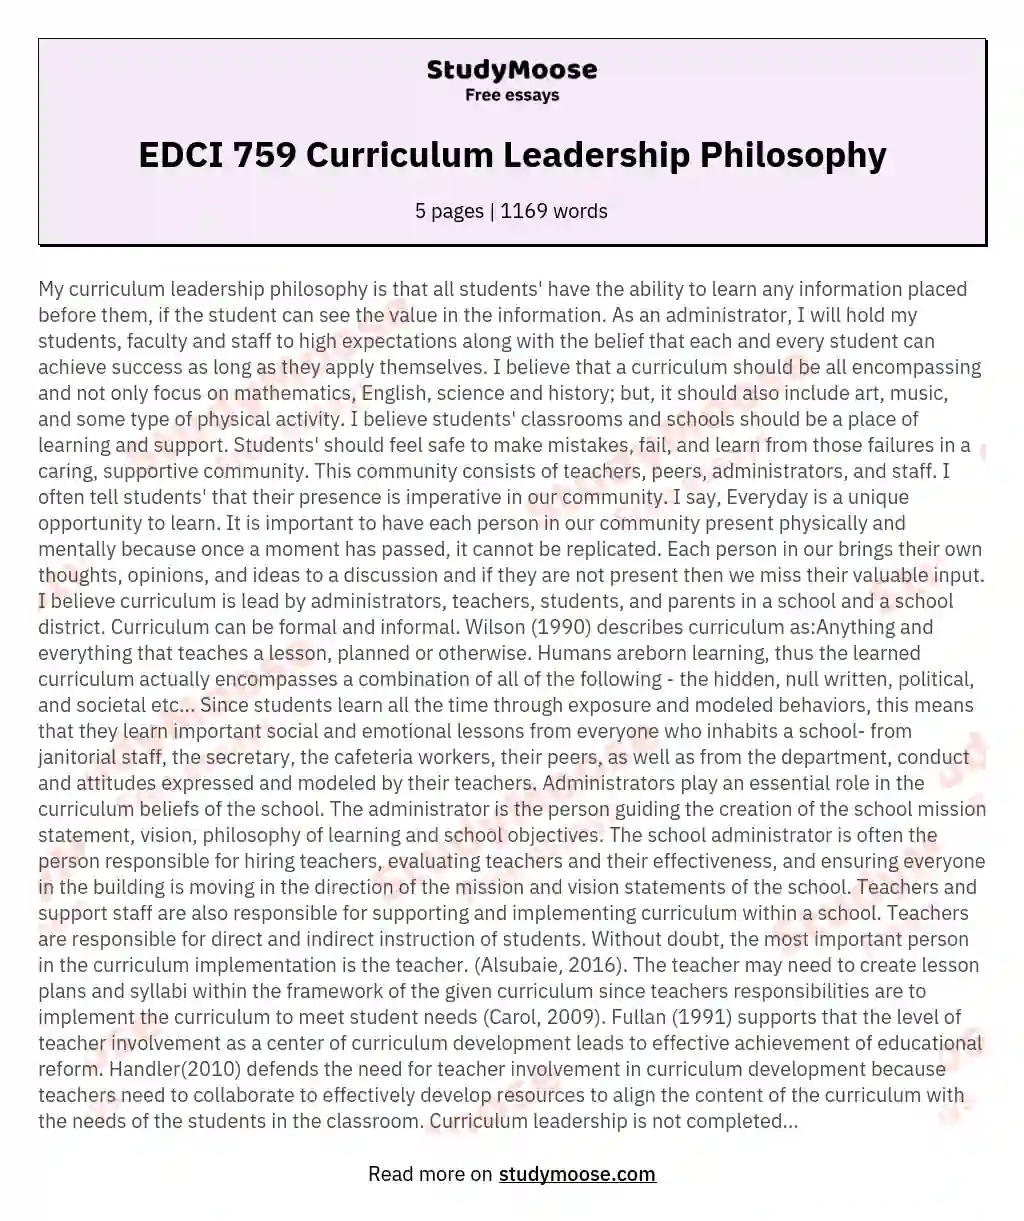 EDCI 759 Curriculum Leadership Philosophy essay